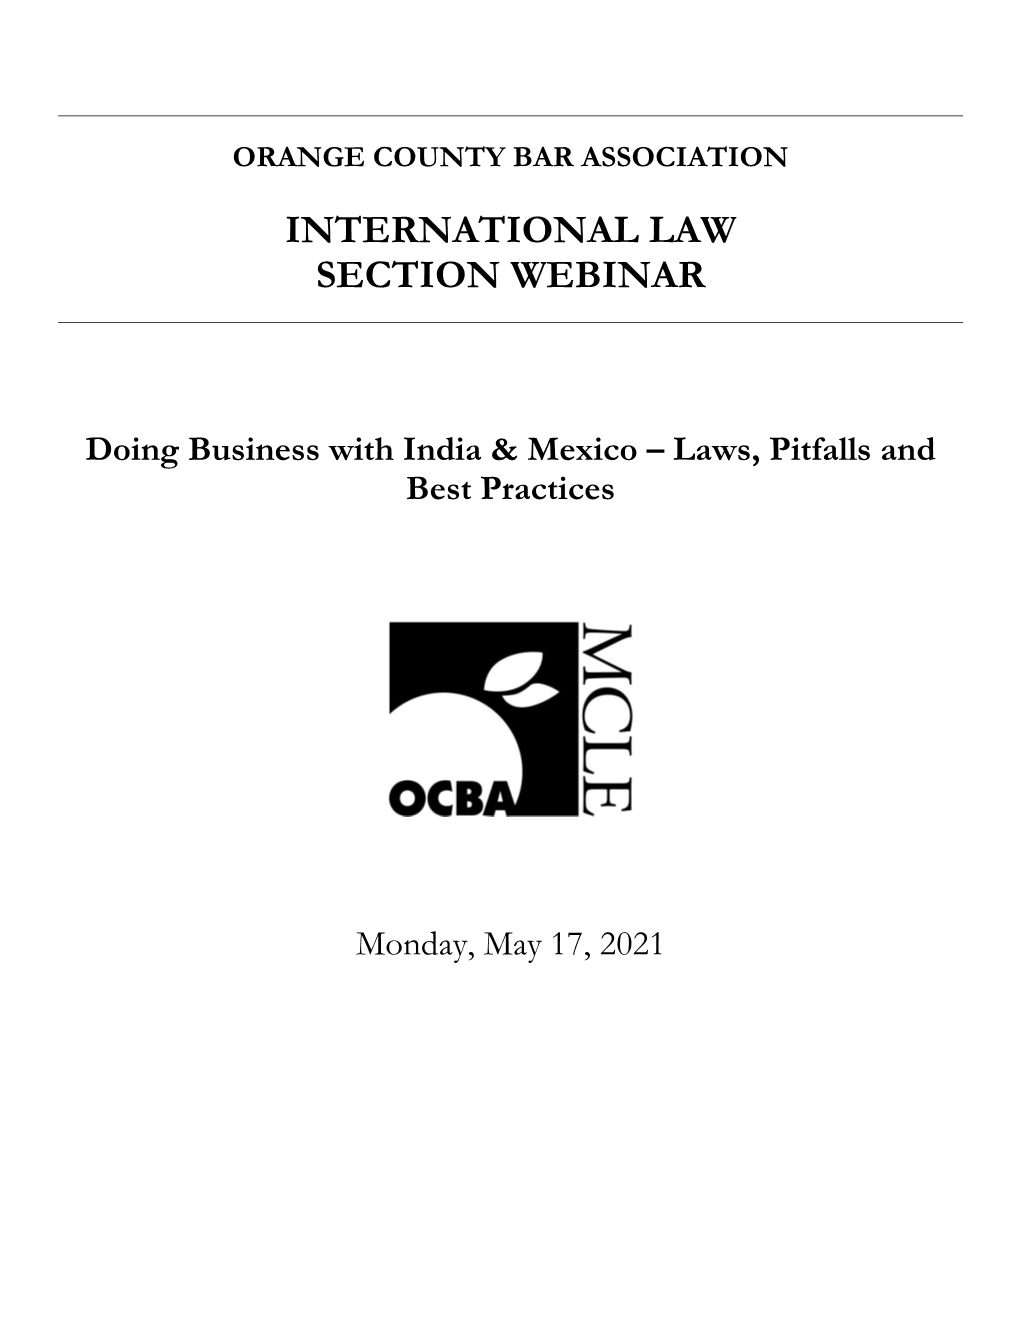 International Law Section Webinar